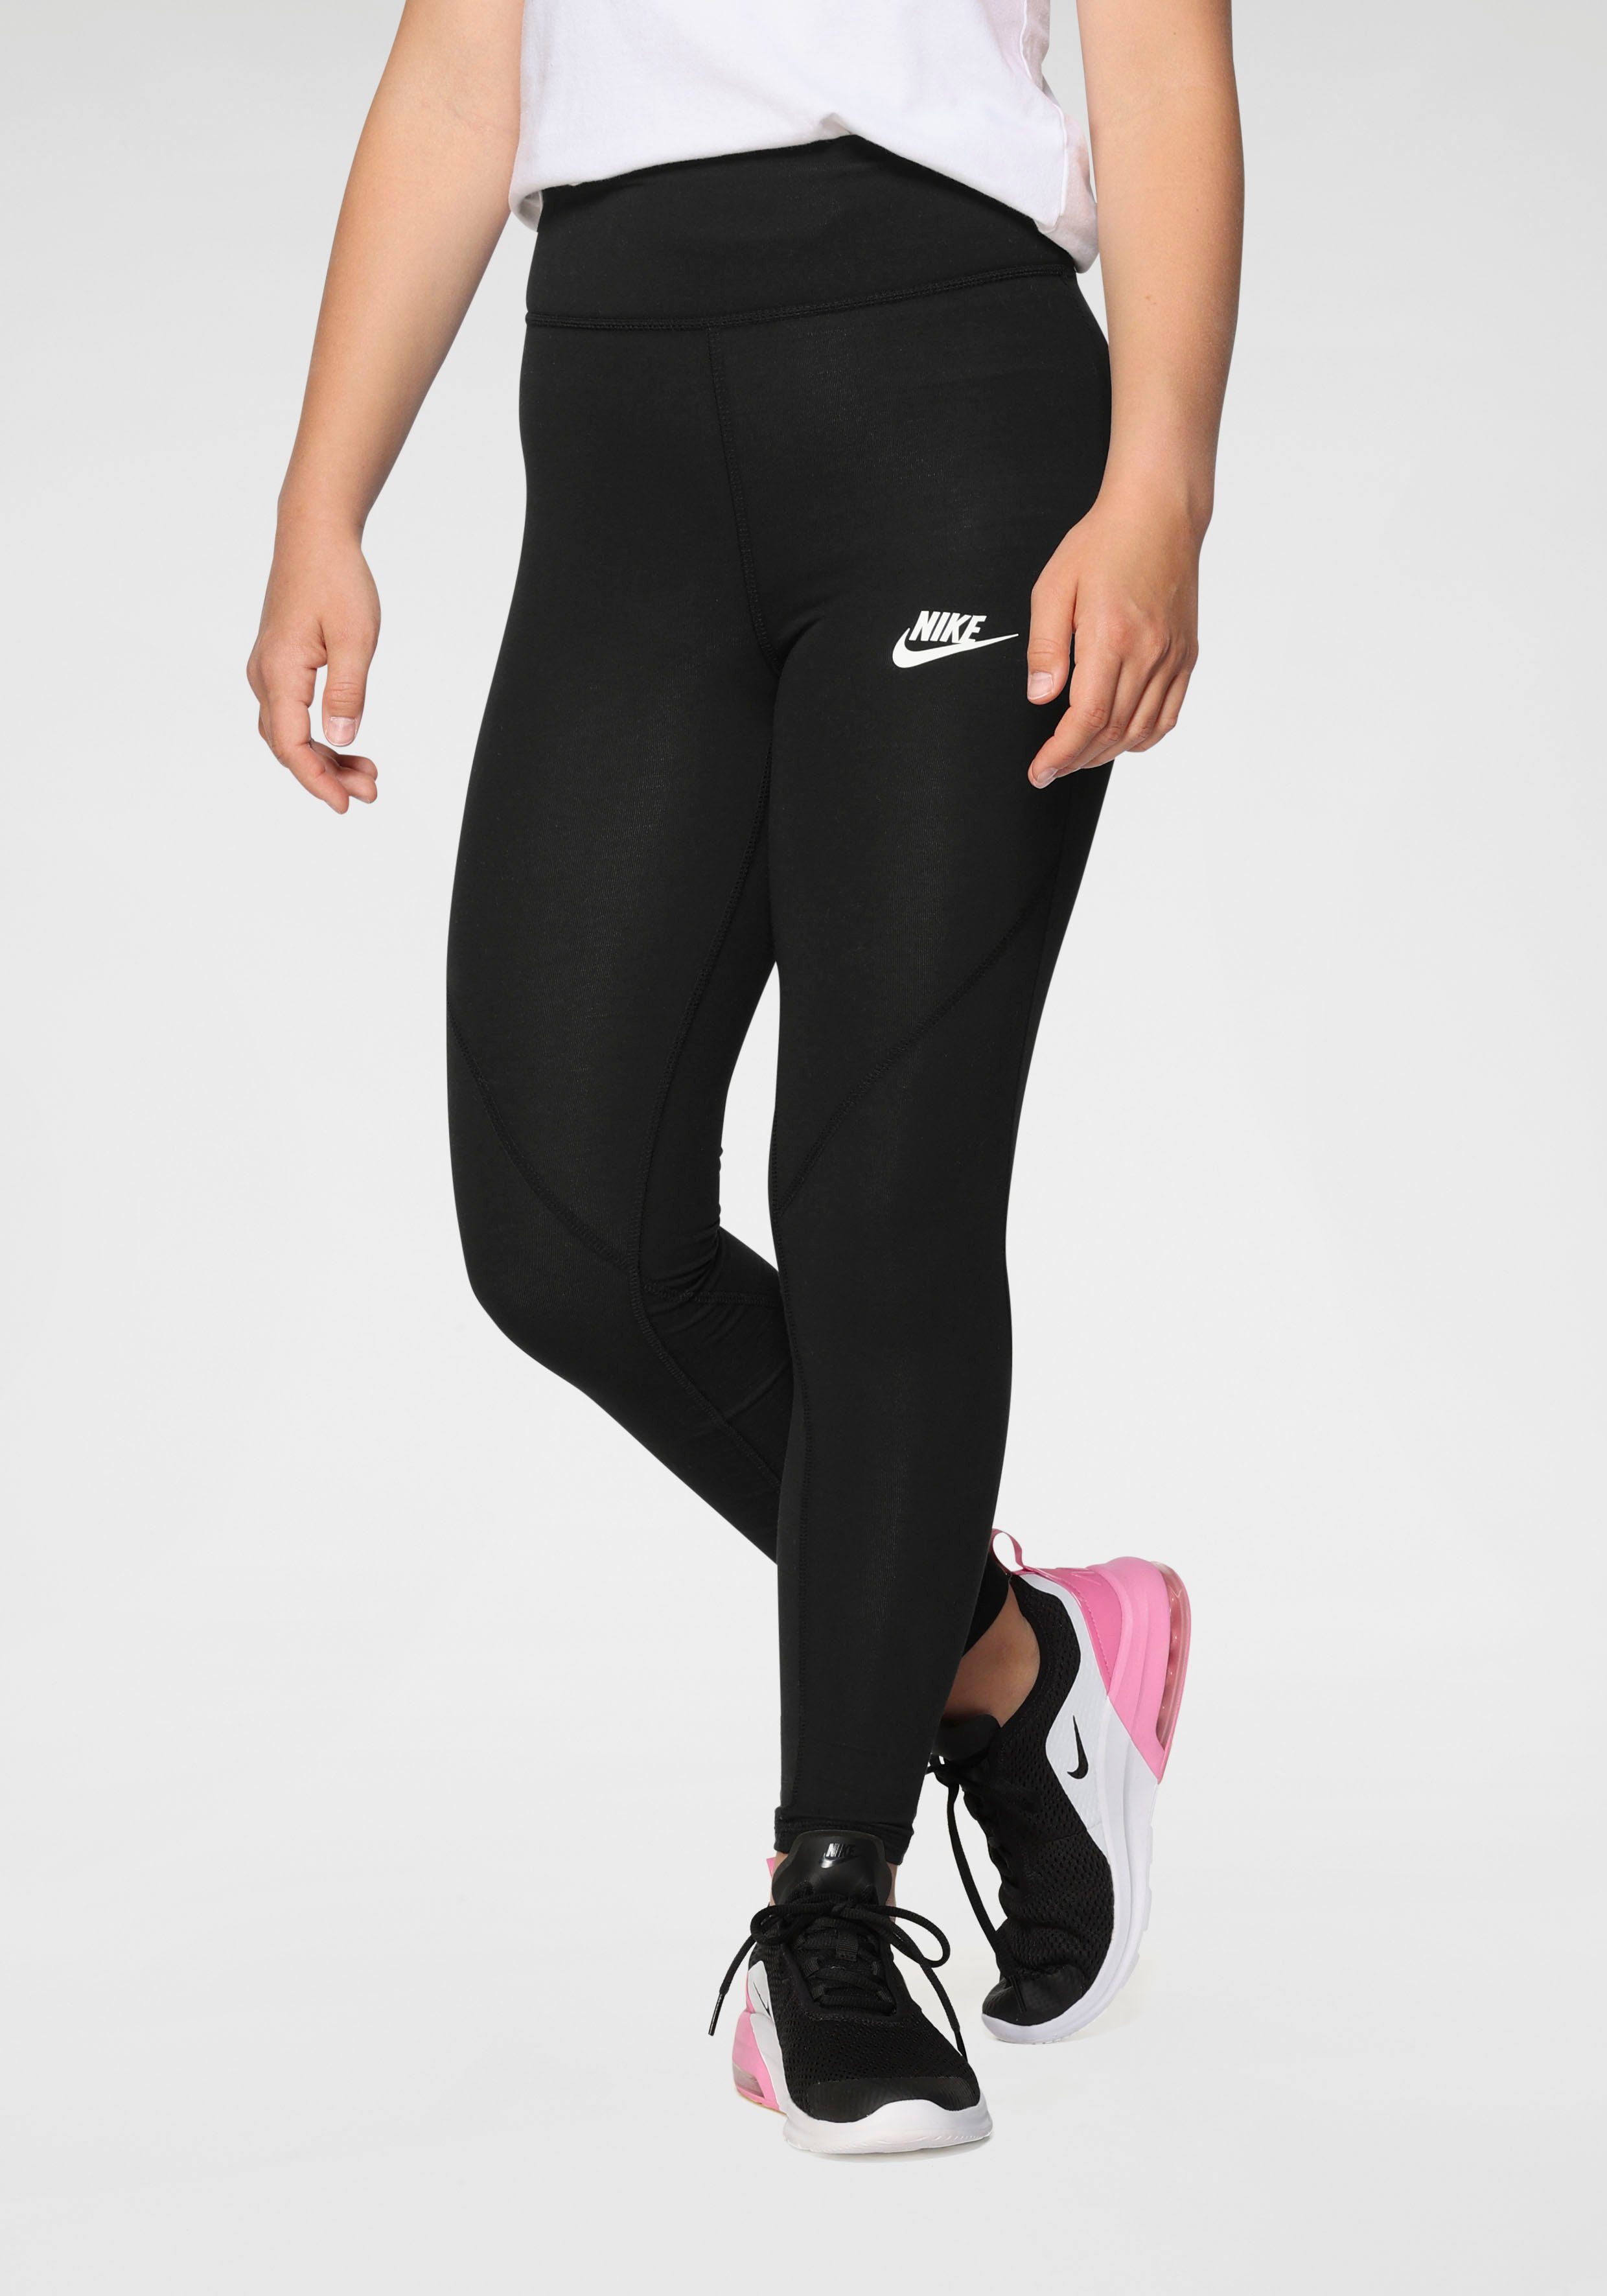 (GIRLS) Nike - FAVORITES LEGGINGS schwarz Leggings KIDS' Sportswear BIG HIGH-WAISTED für Kinder